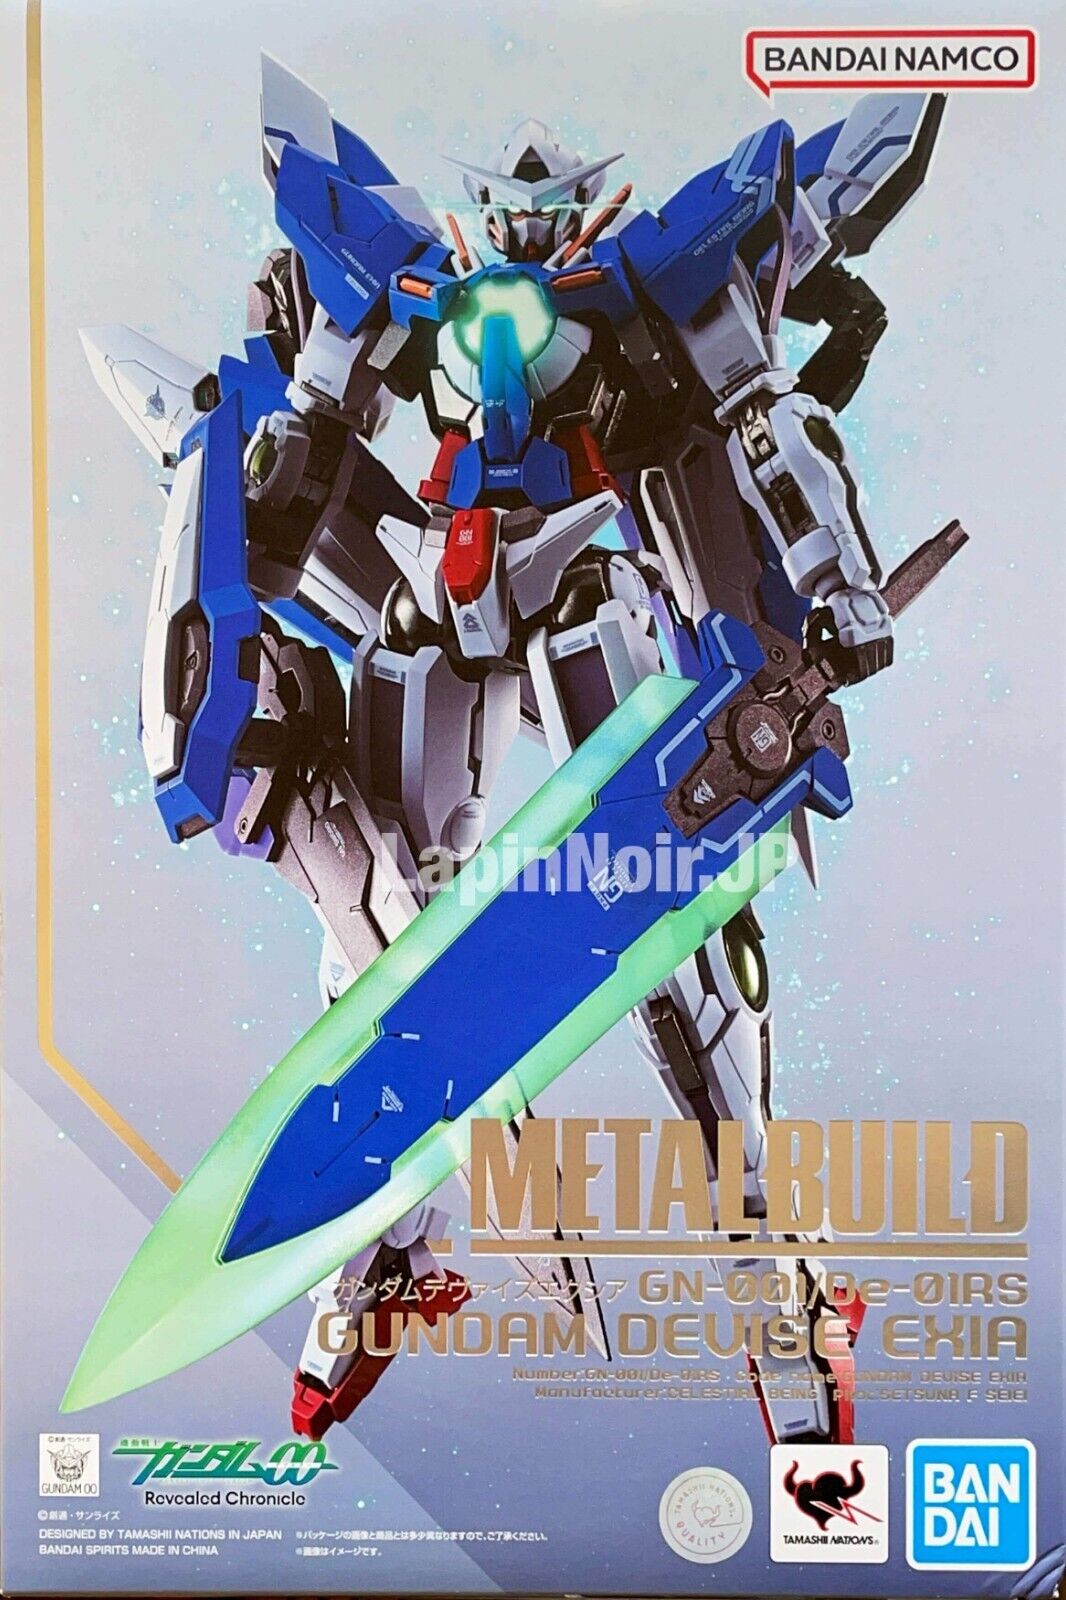 Gundam Devise Exia Mobile Suit Gundam 00 Revealed Chronicle METAL BUILD BANDAI